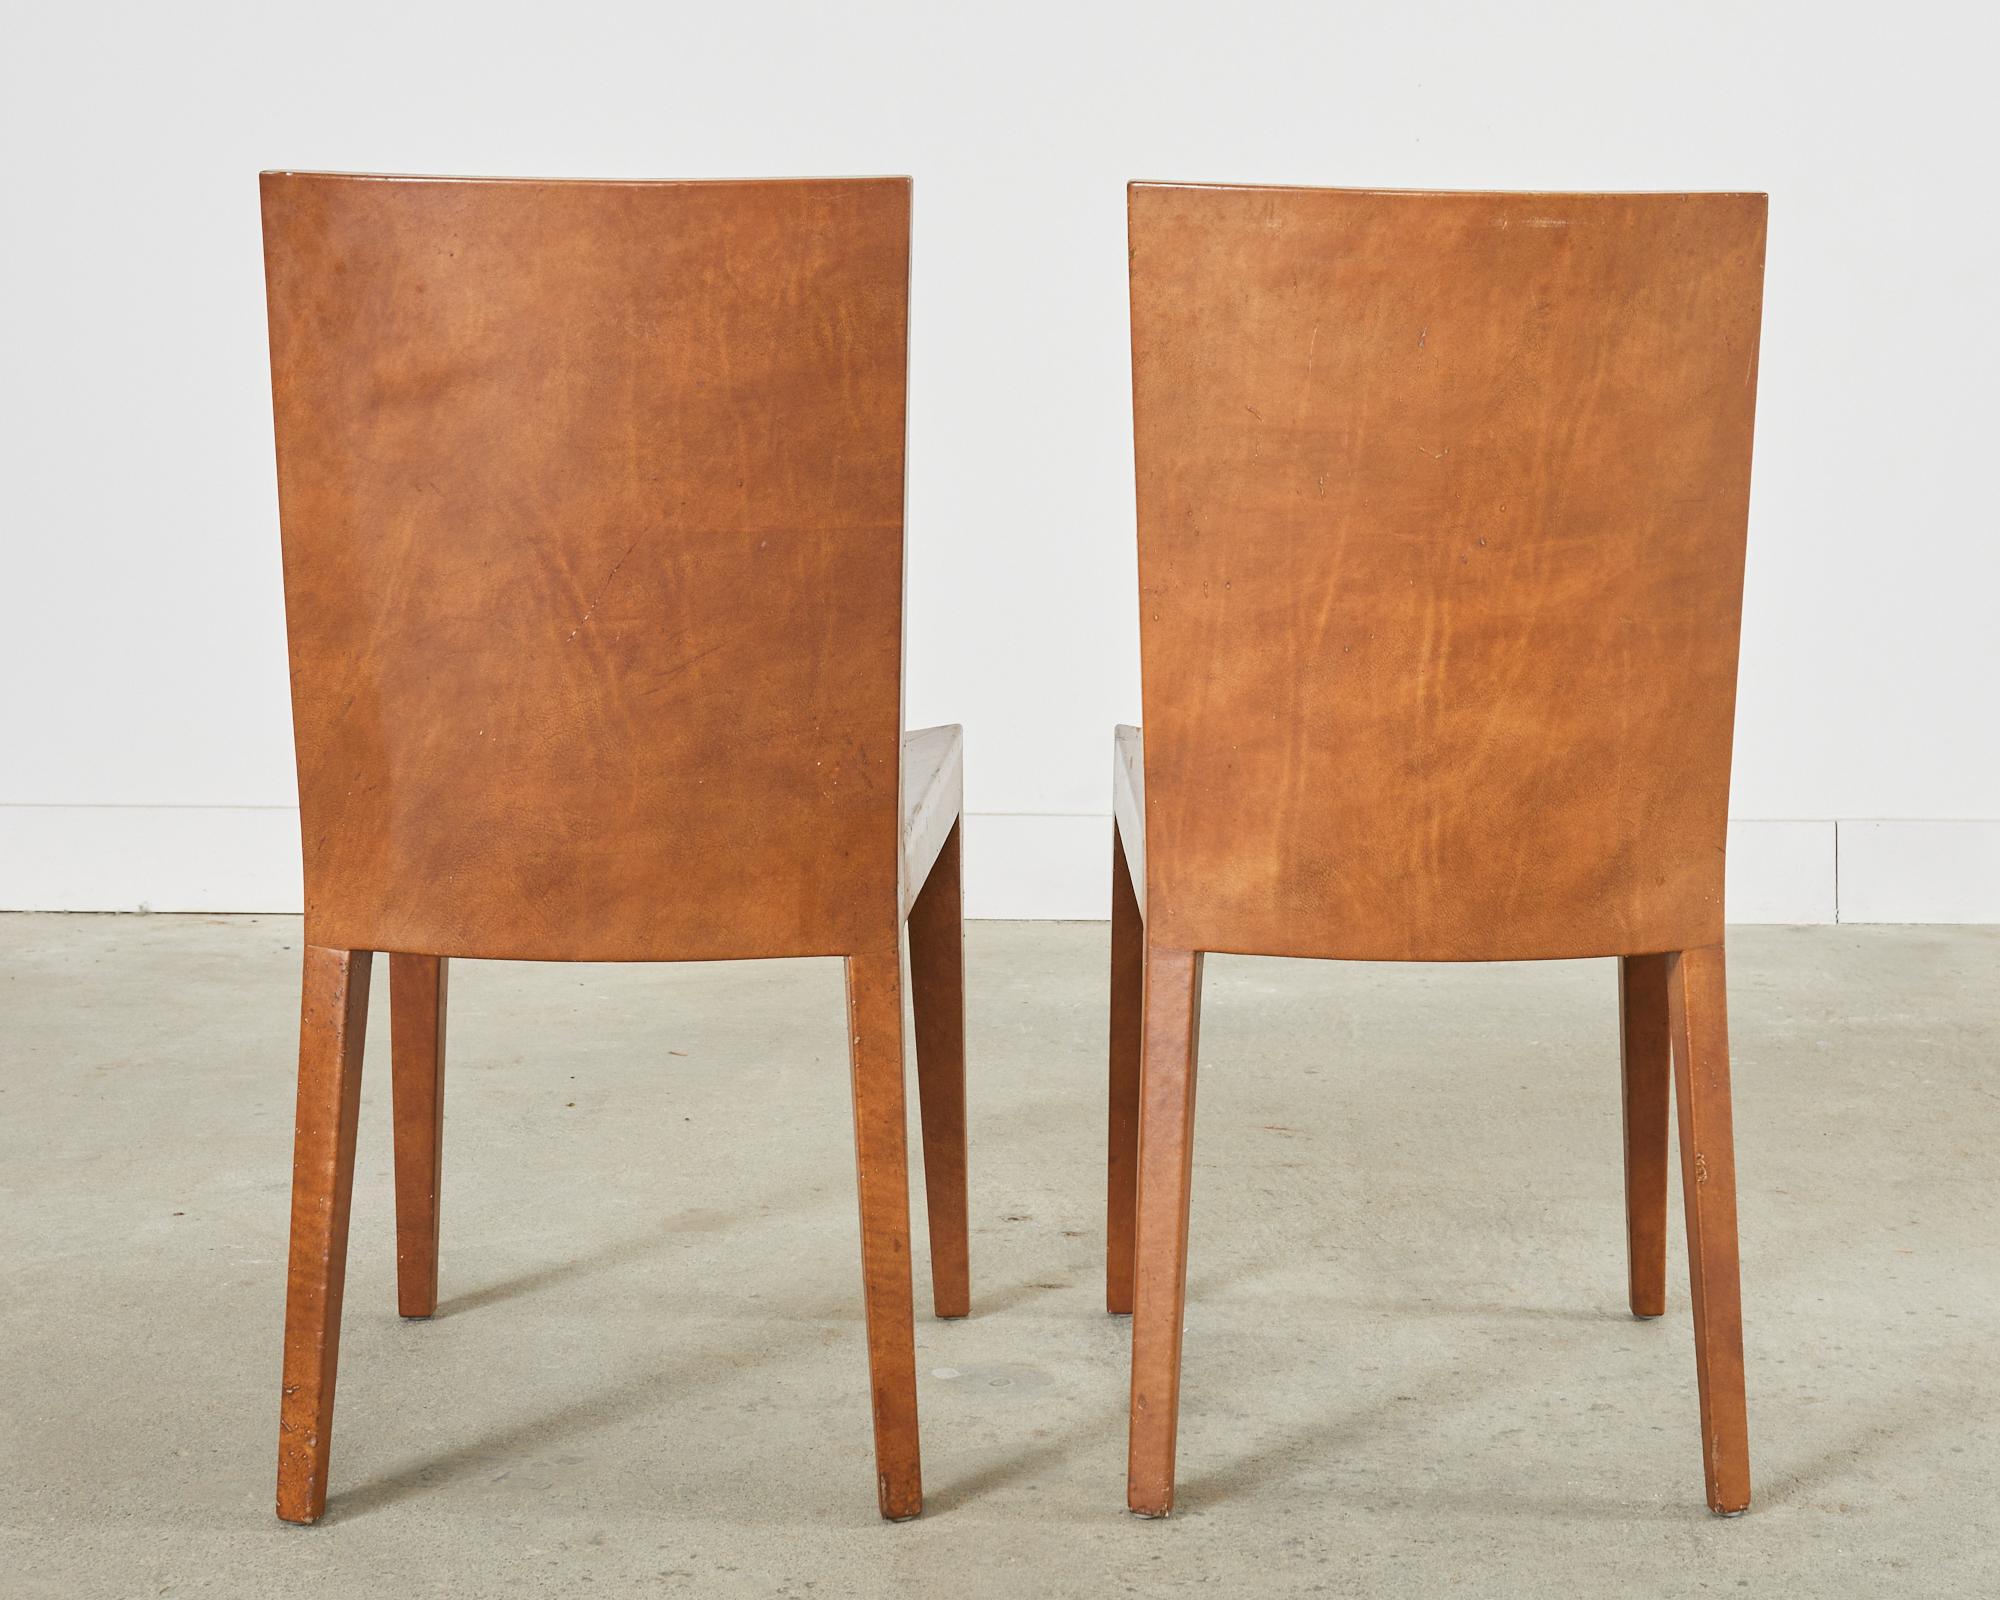 Pair of Signed Karl Springer Goatskin JMF Chairs, 1986 For Sale 8